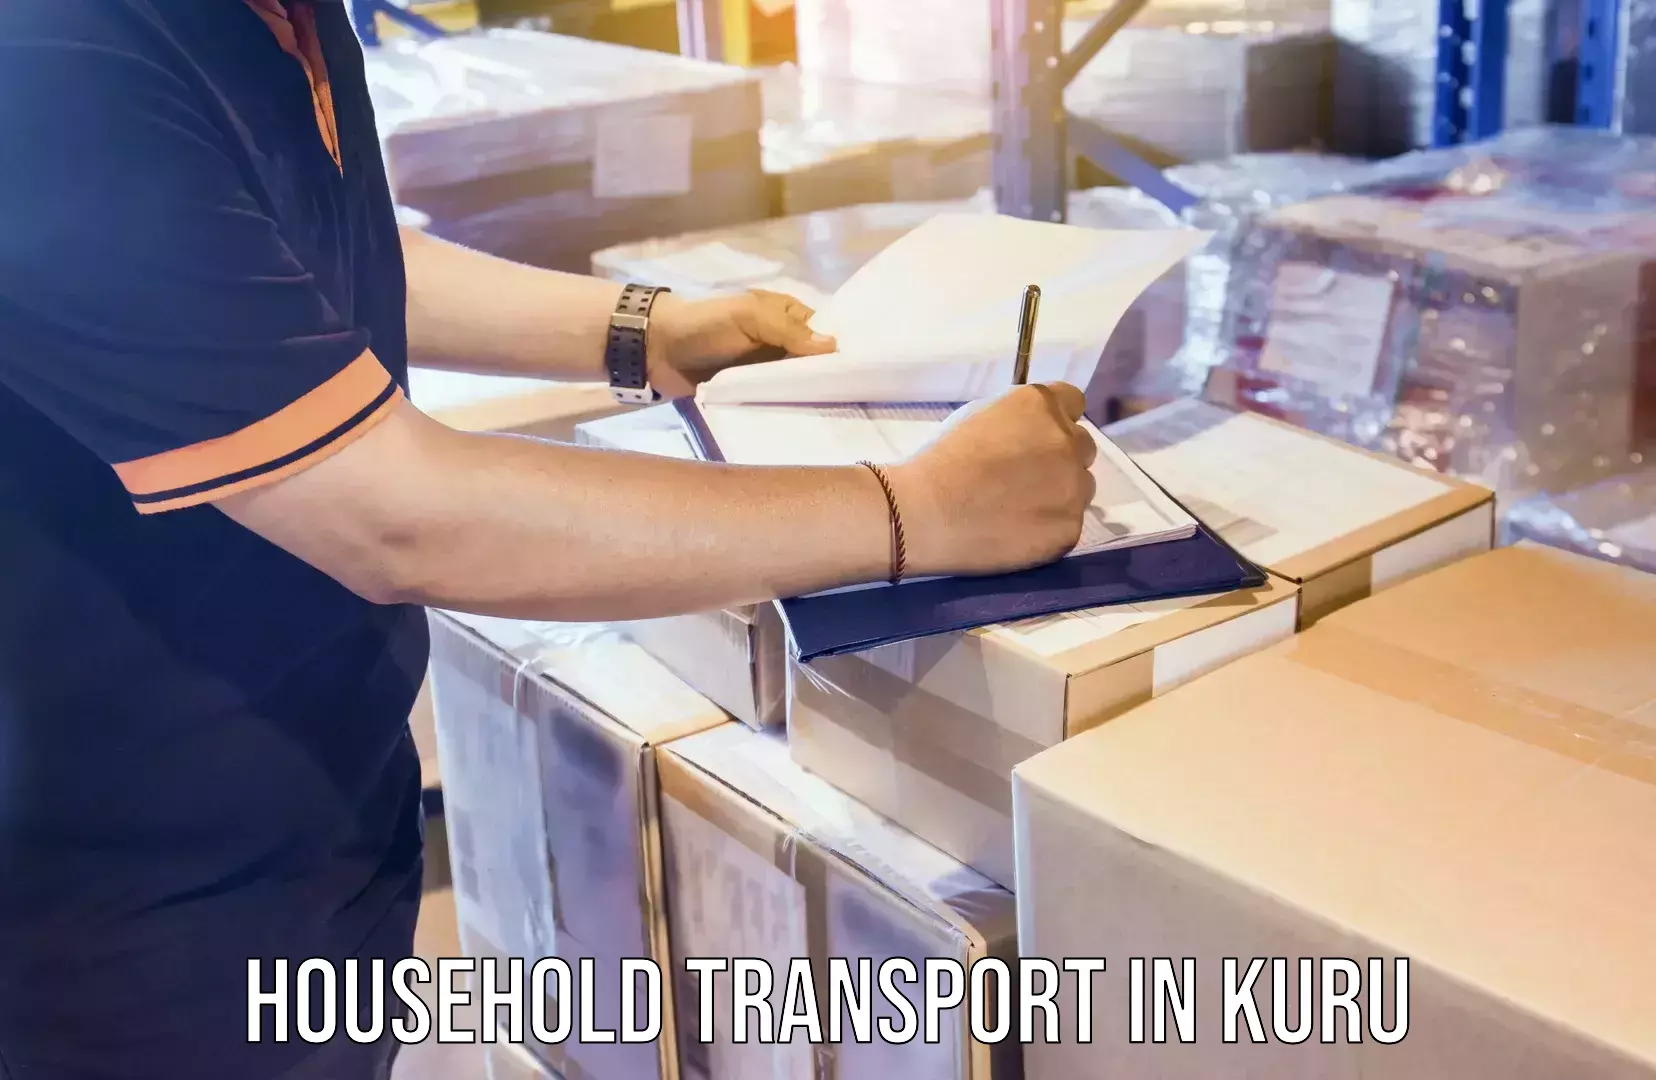 Expert household movers in Kuru